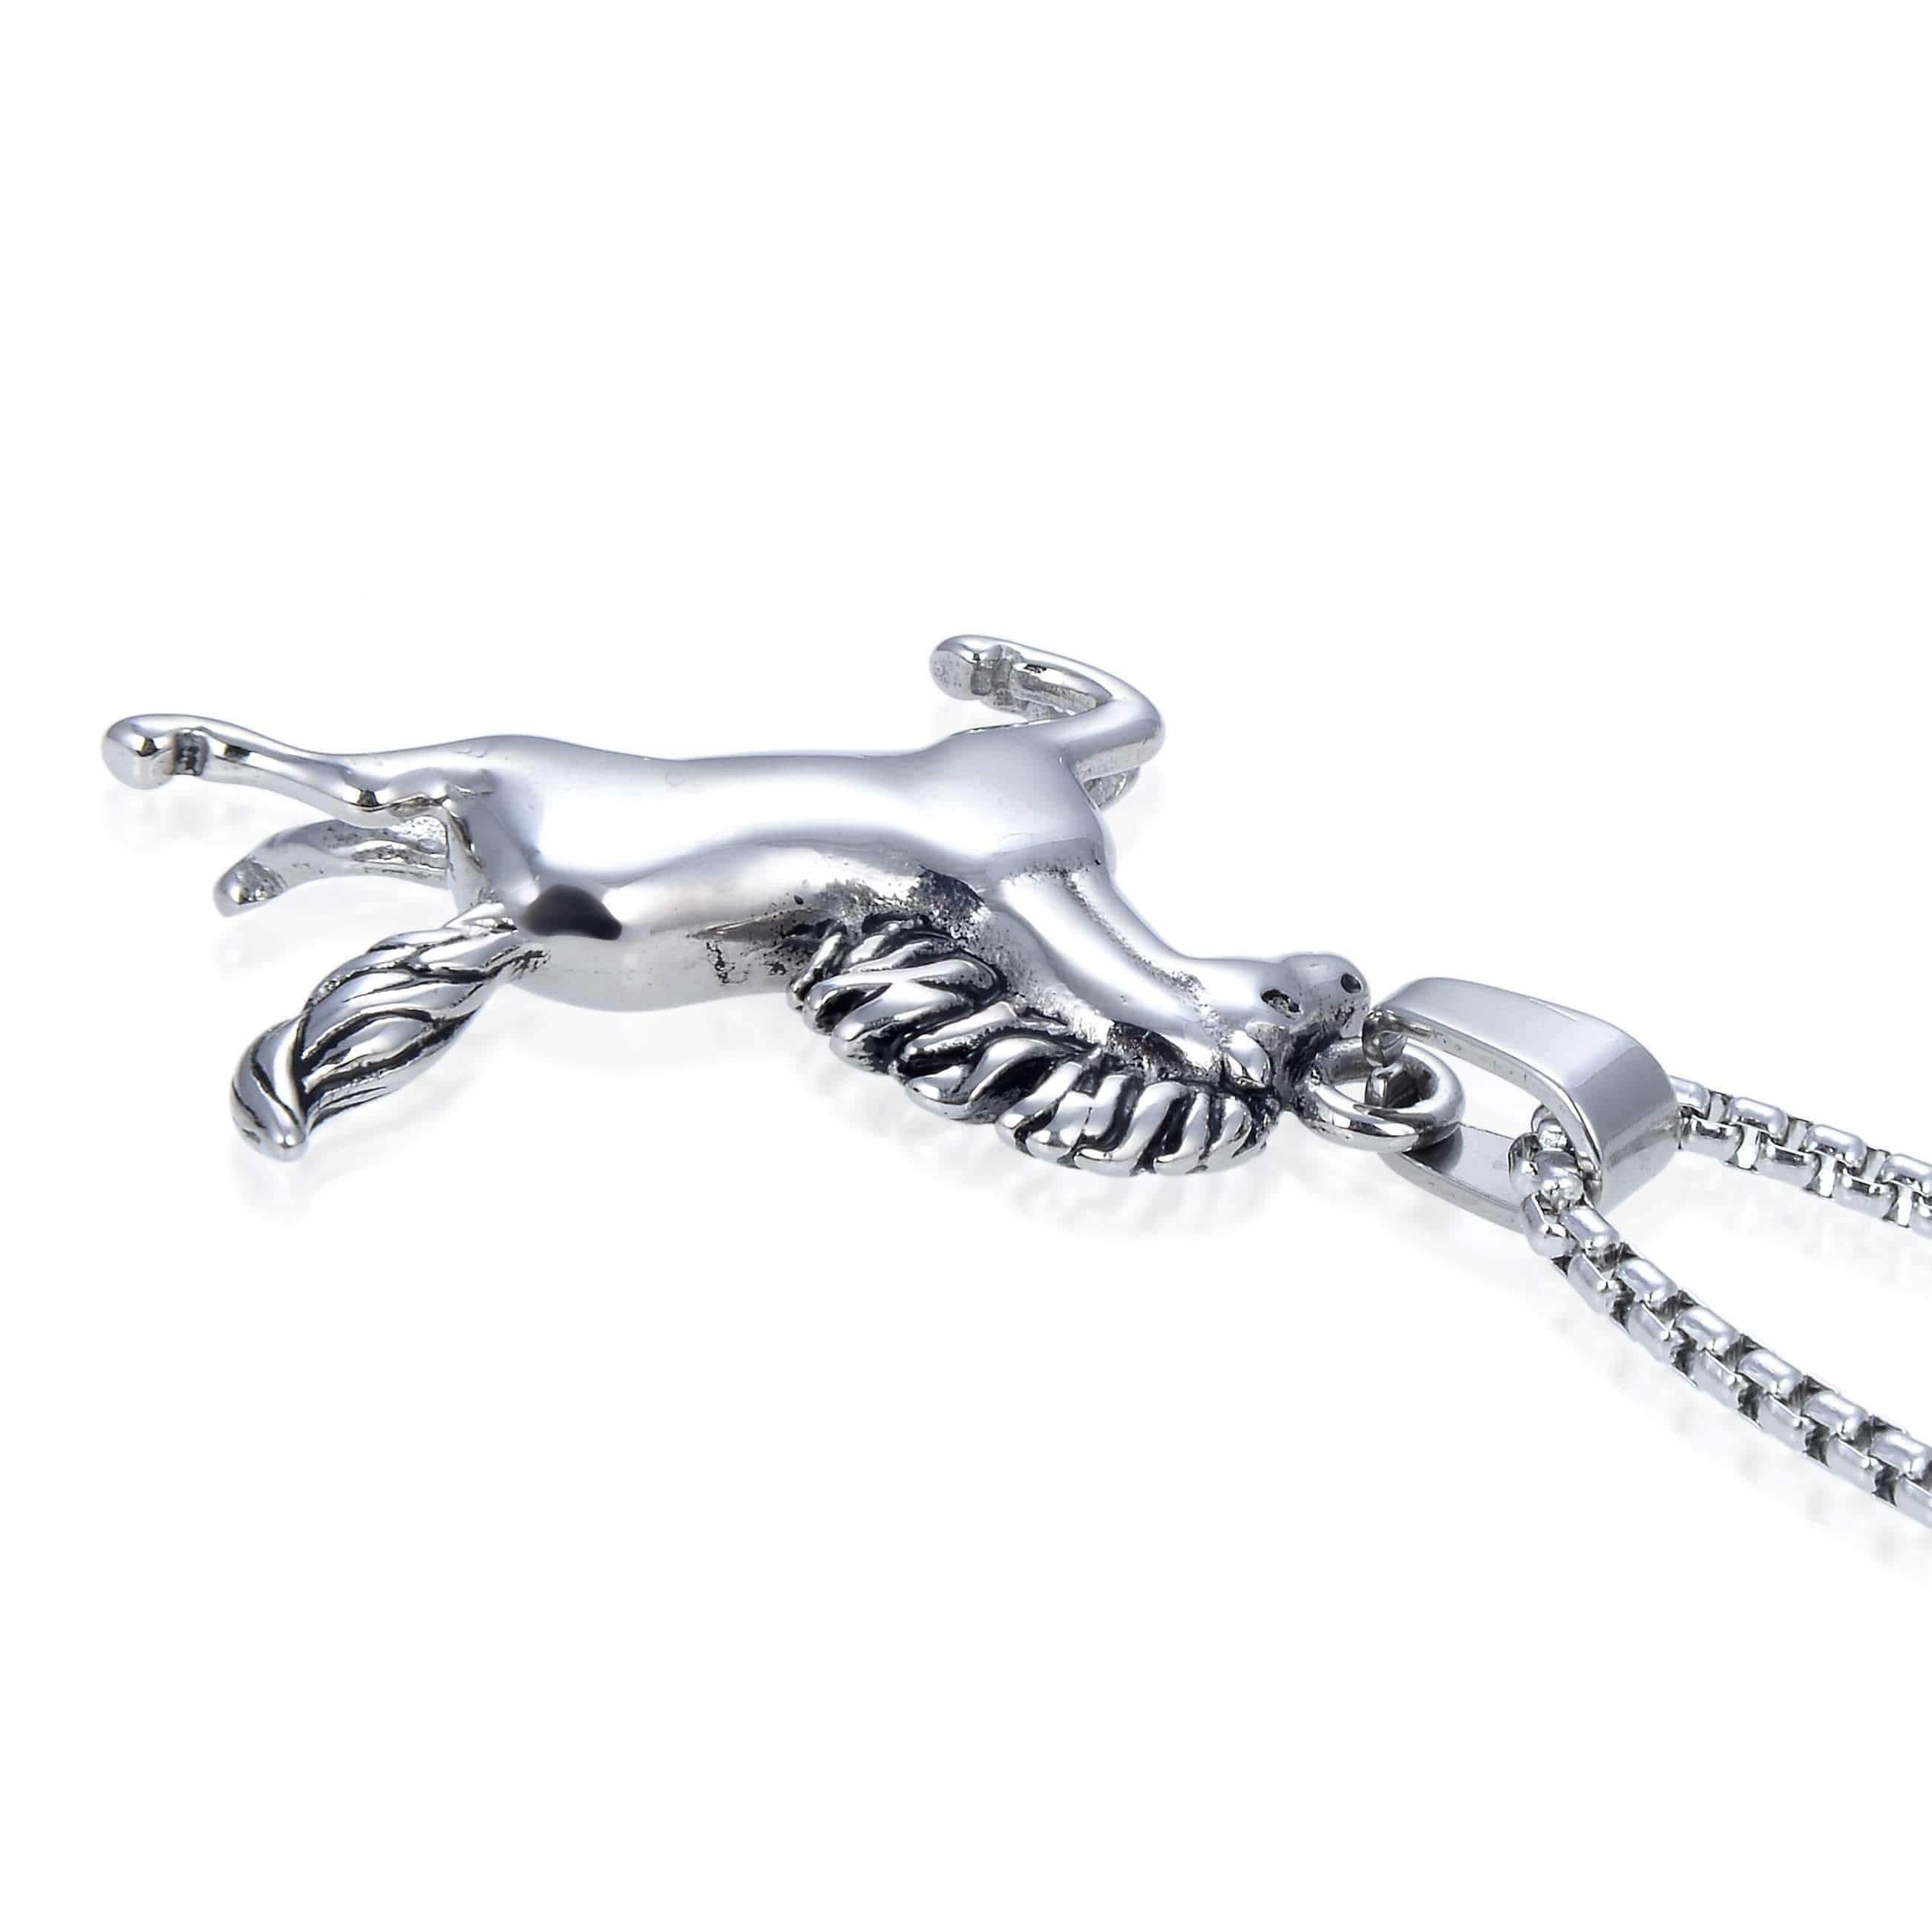 Kalifano Steel Hearts Jewelry Steel Hearts Rearing Horse Necklace SHN120-87